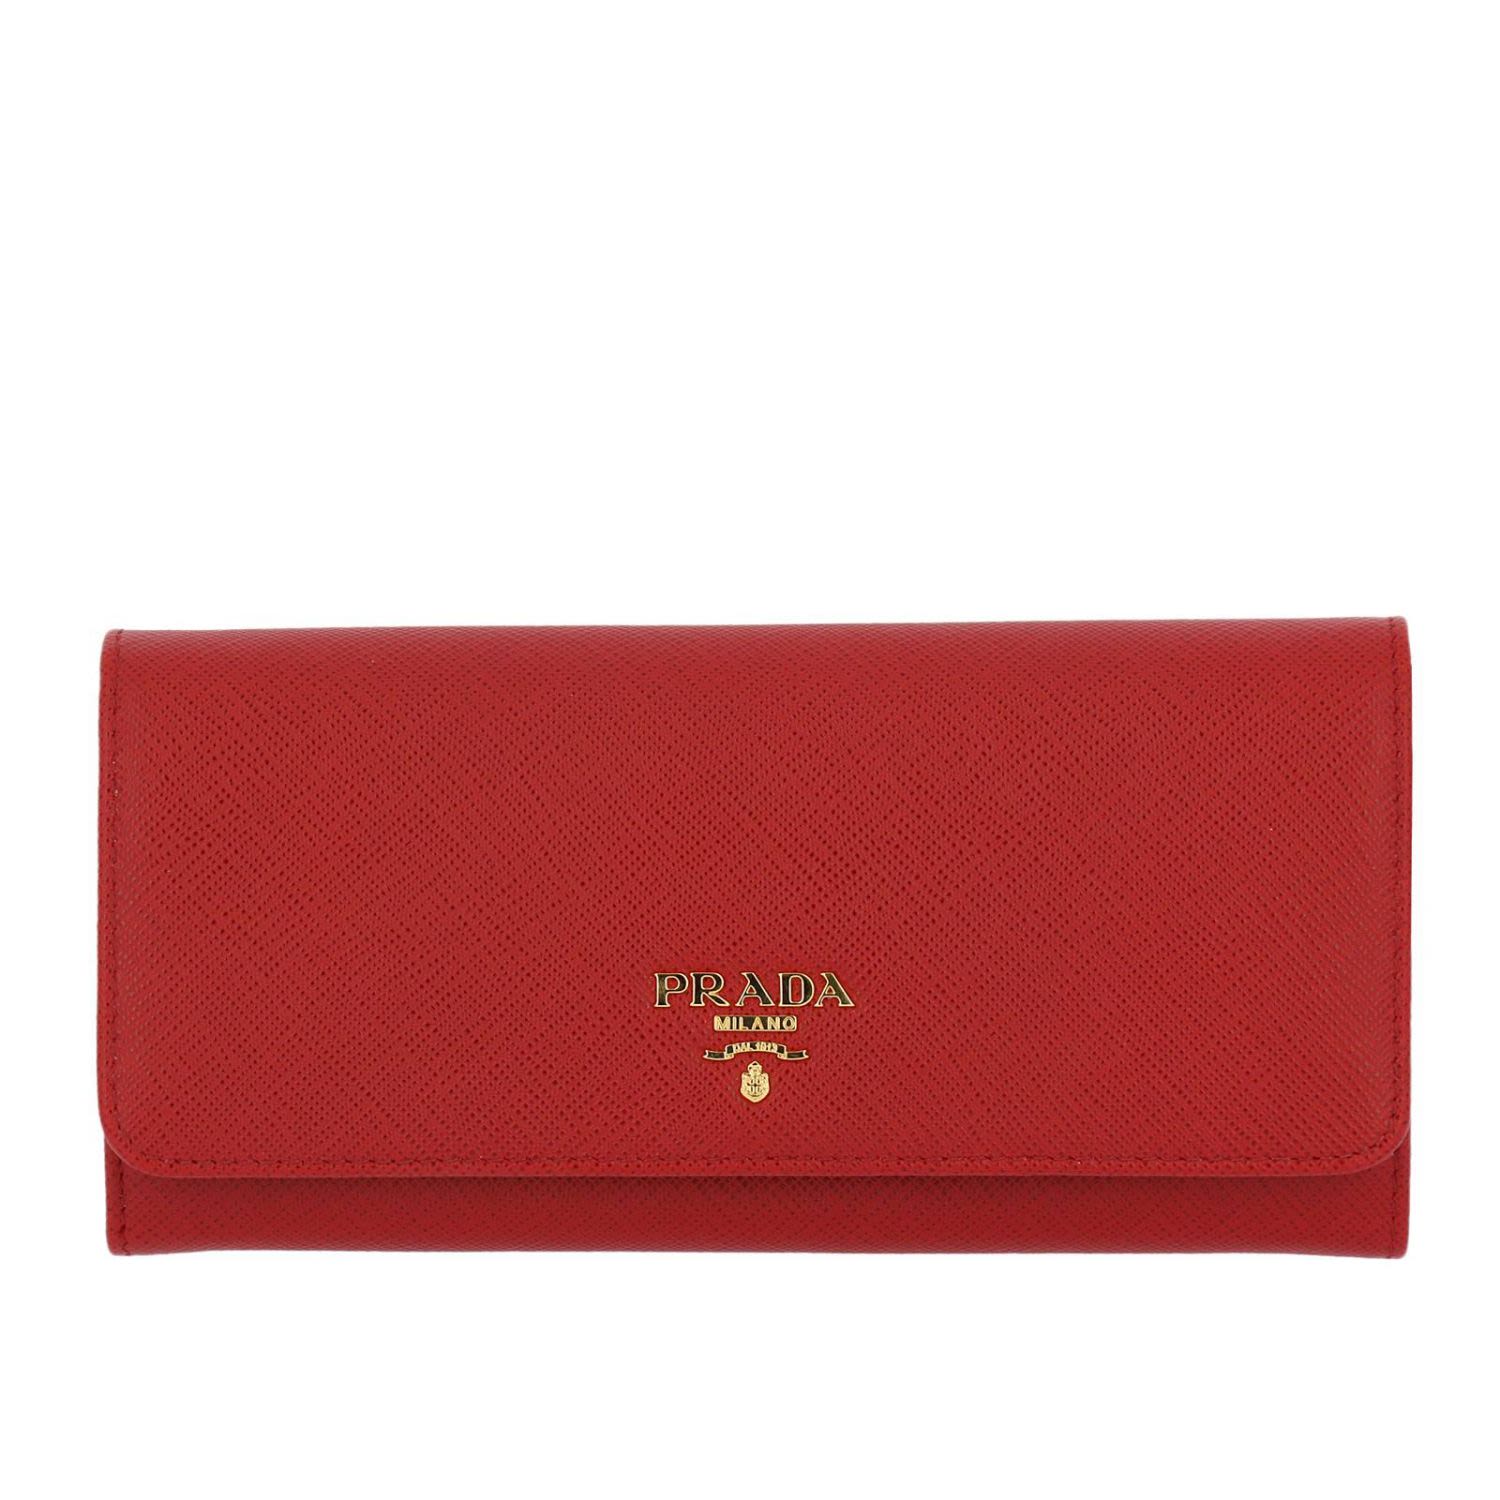 italist | Best price in the market for Prada Prada Wallet Wallet Women Prada - red - 10508219 ...